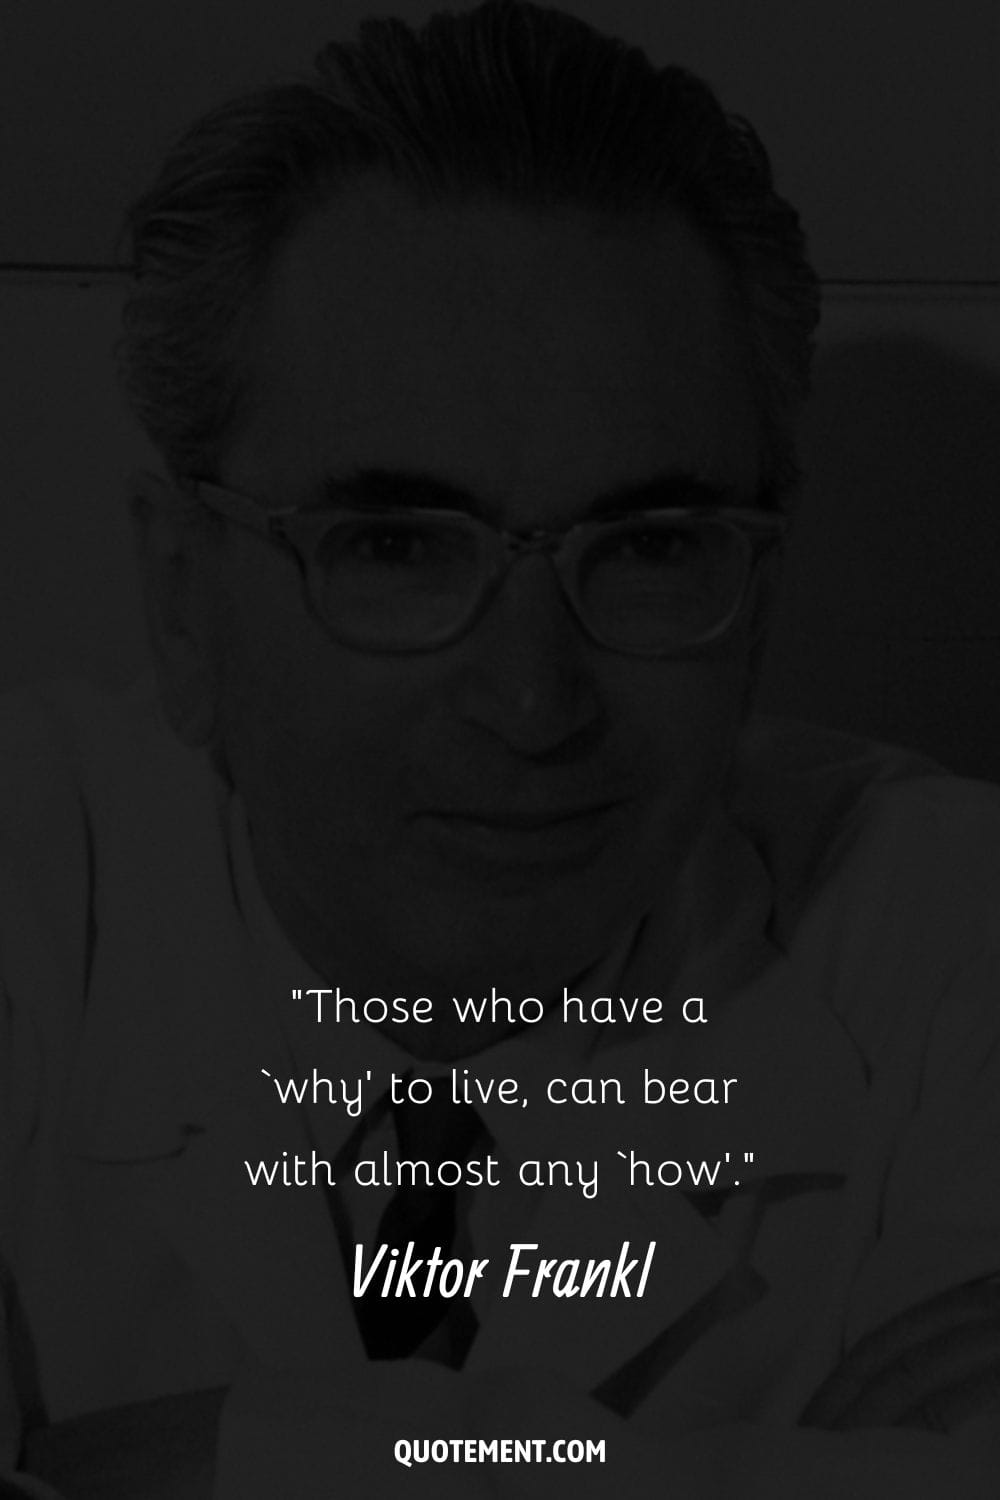 Image of Viktor Frankl representing Viktor Frankl quote.